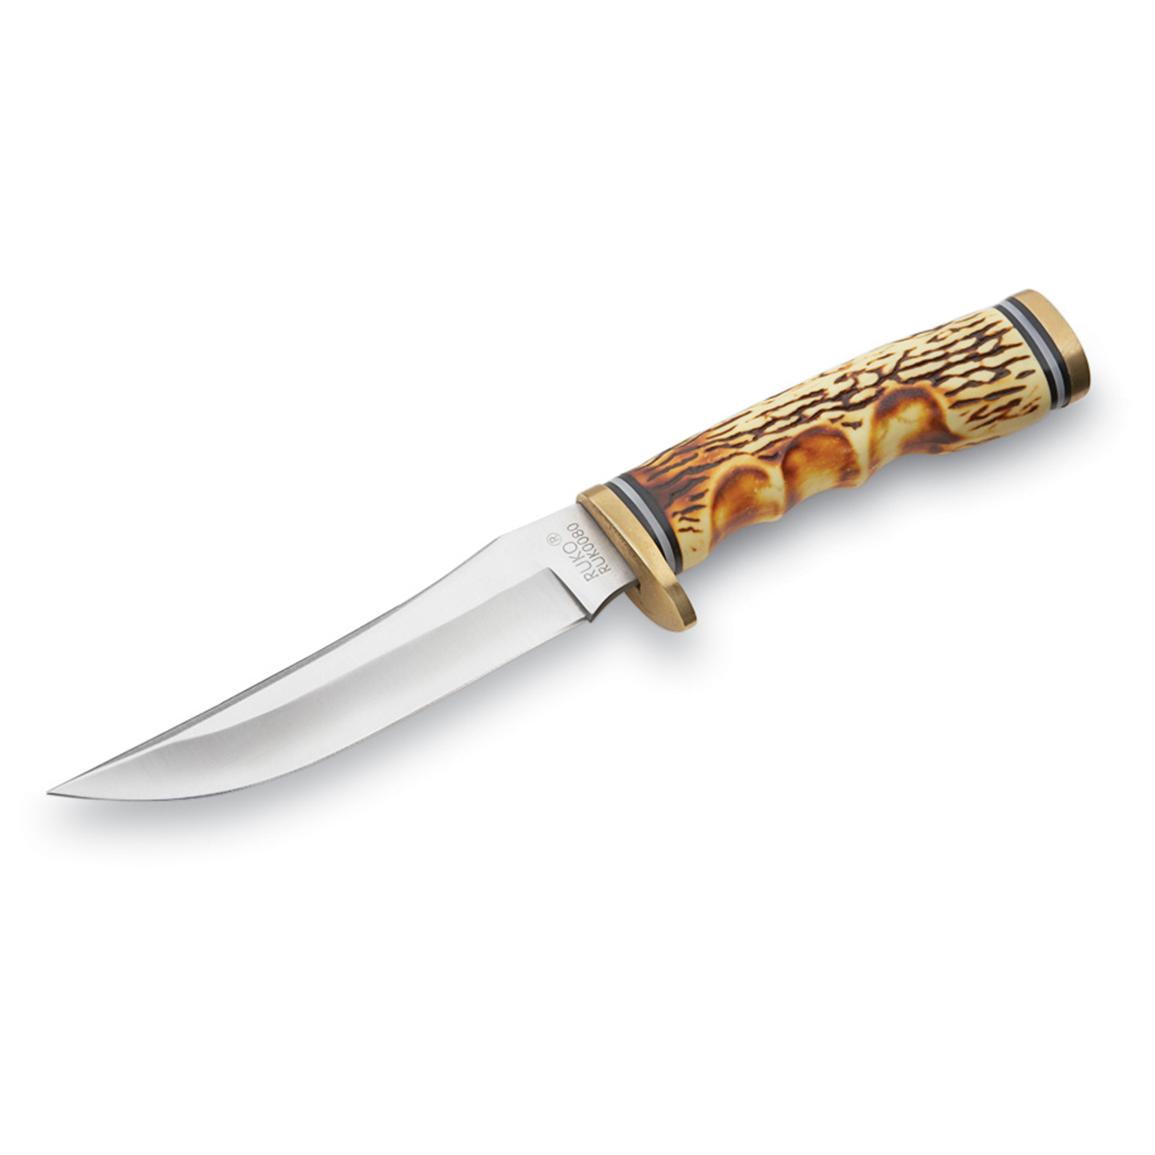 Ruko® Fixed Blade Knife - 120075, at Sportsman's Guide